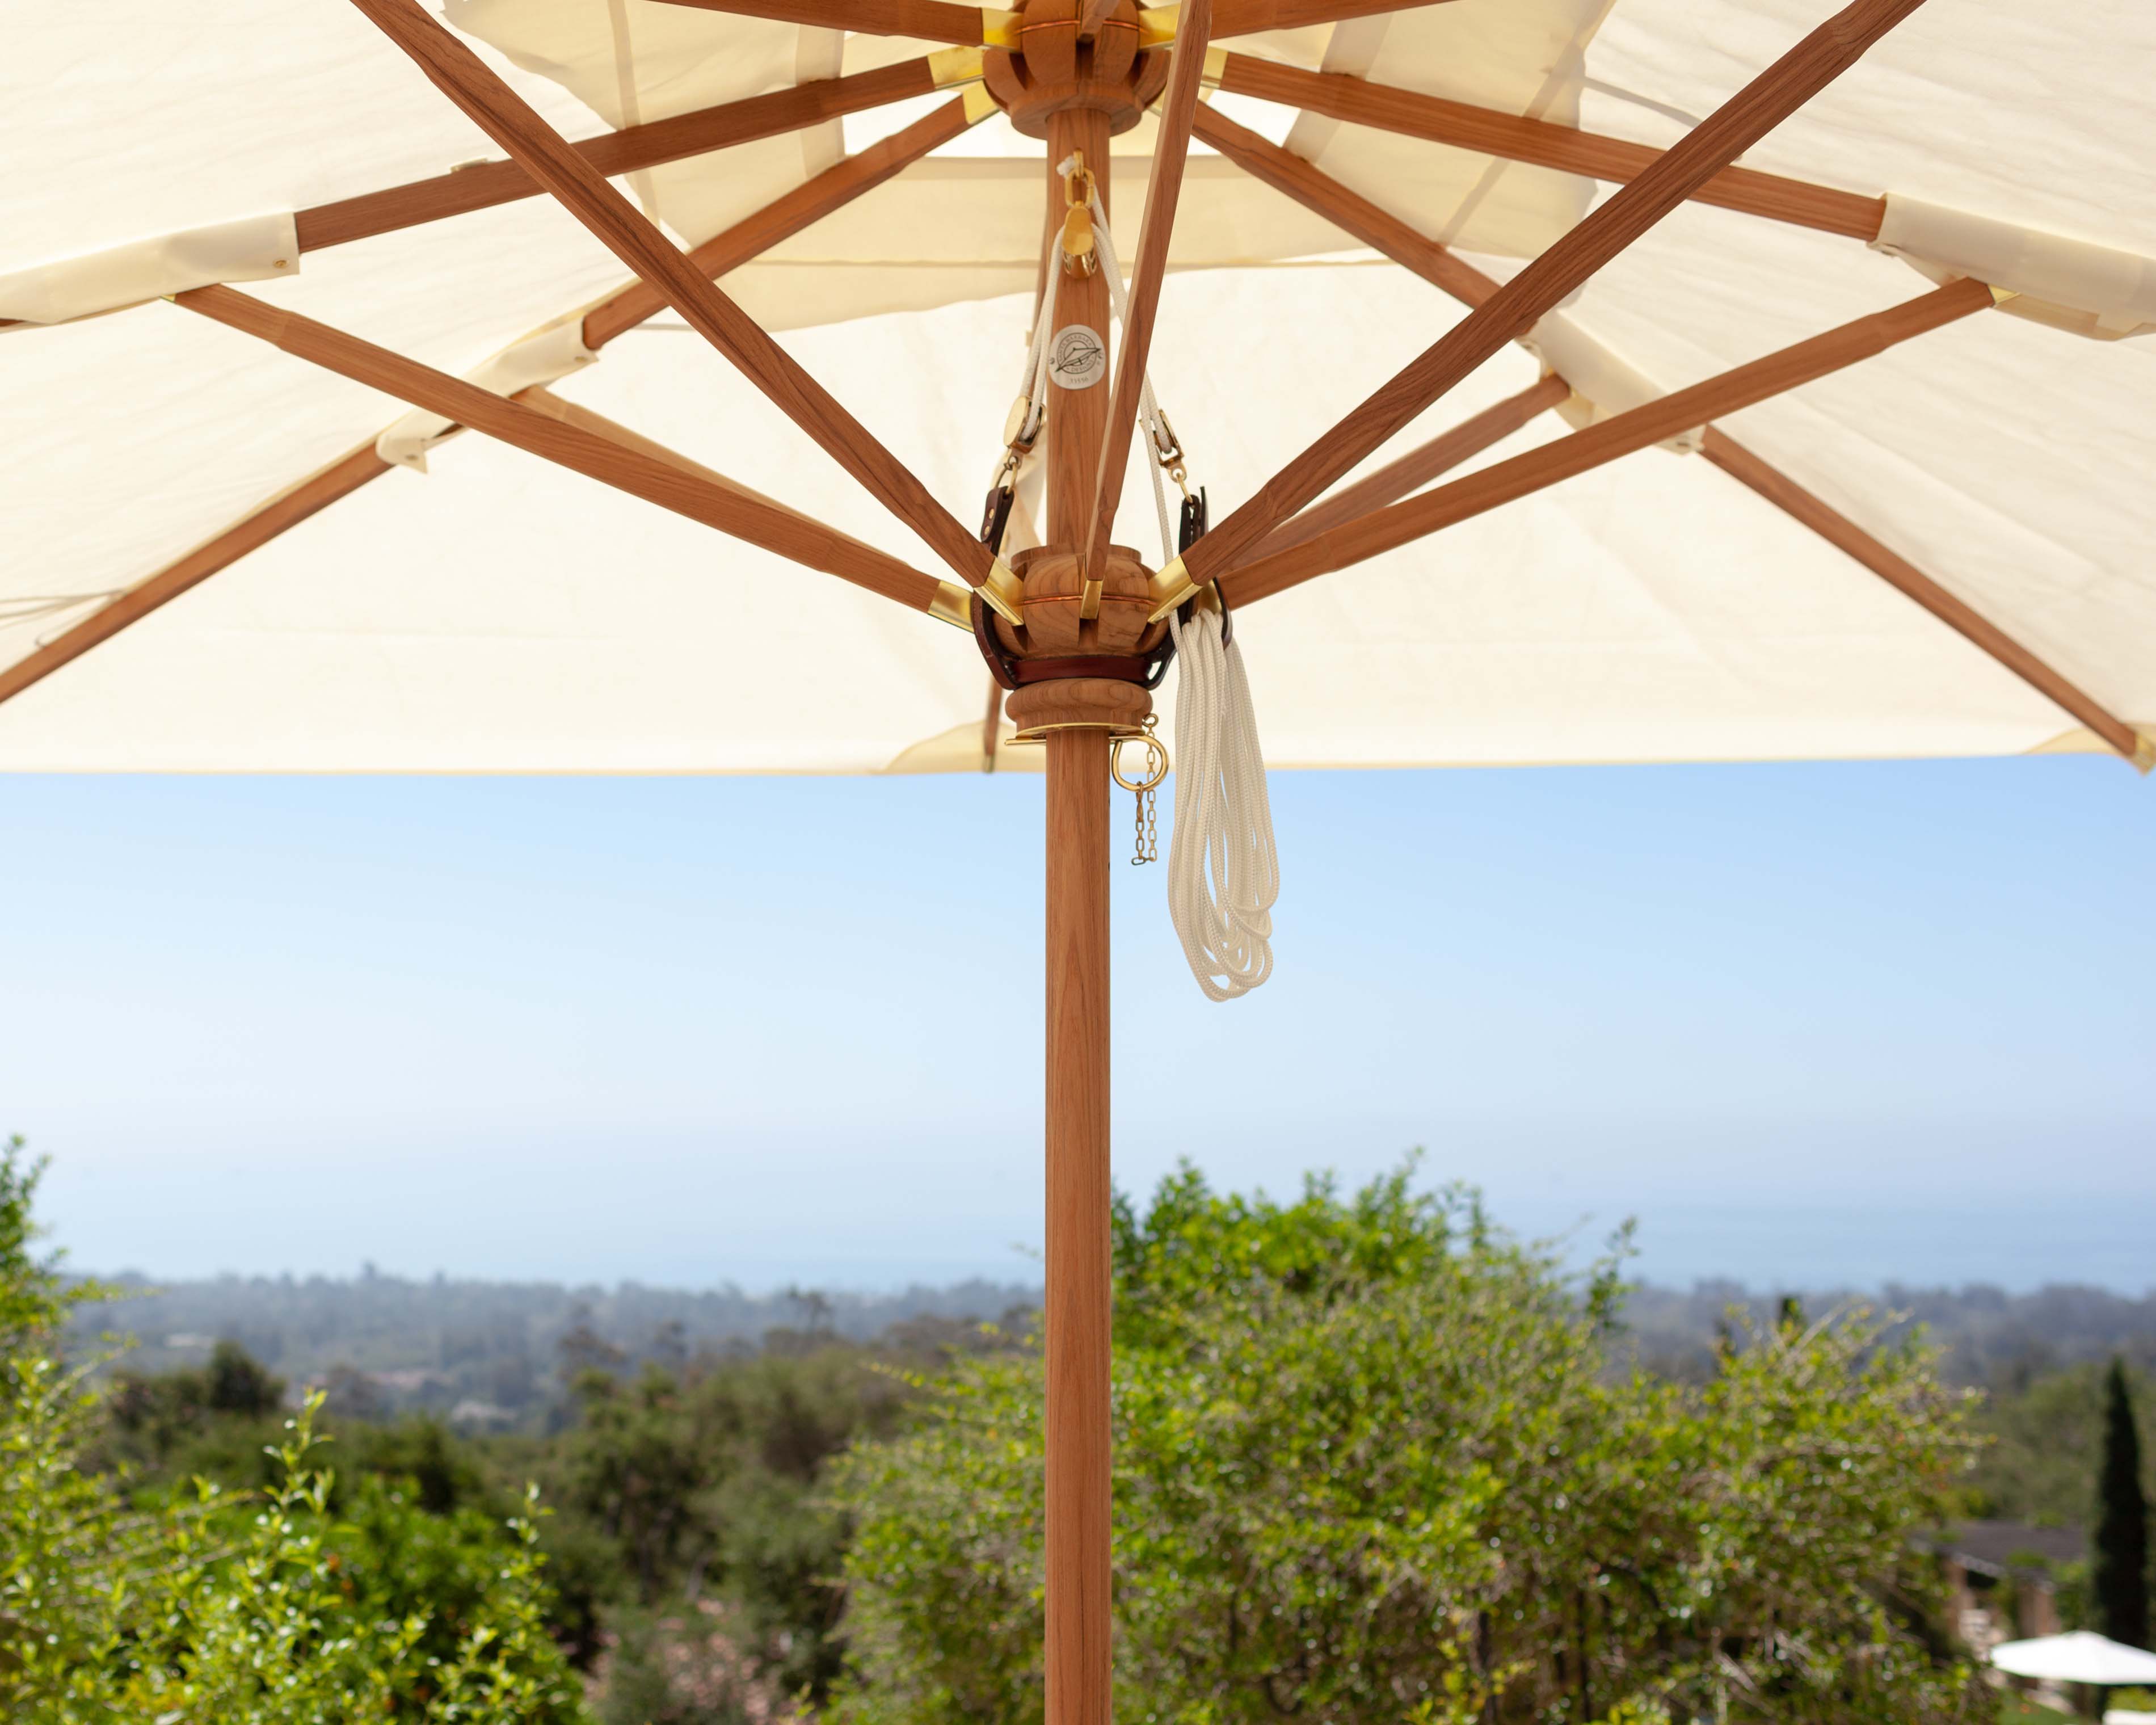 Santa Barbara umbrella Image